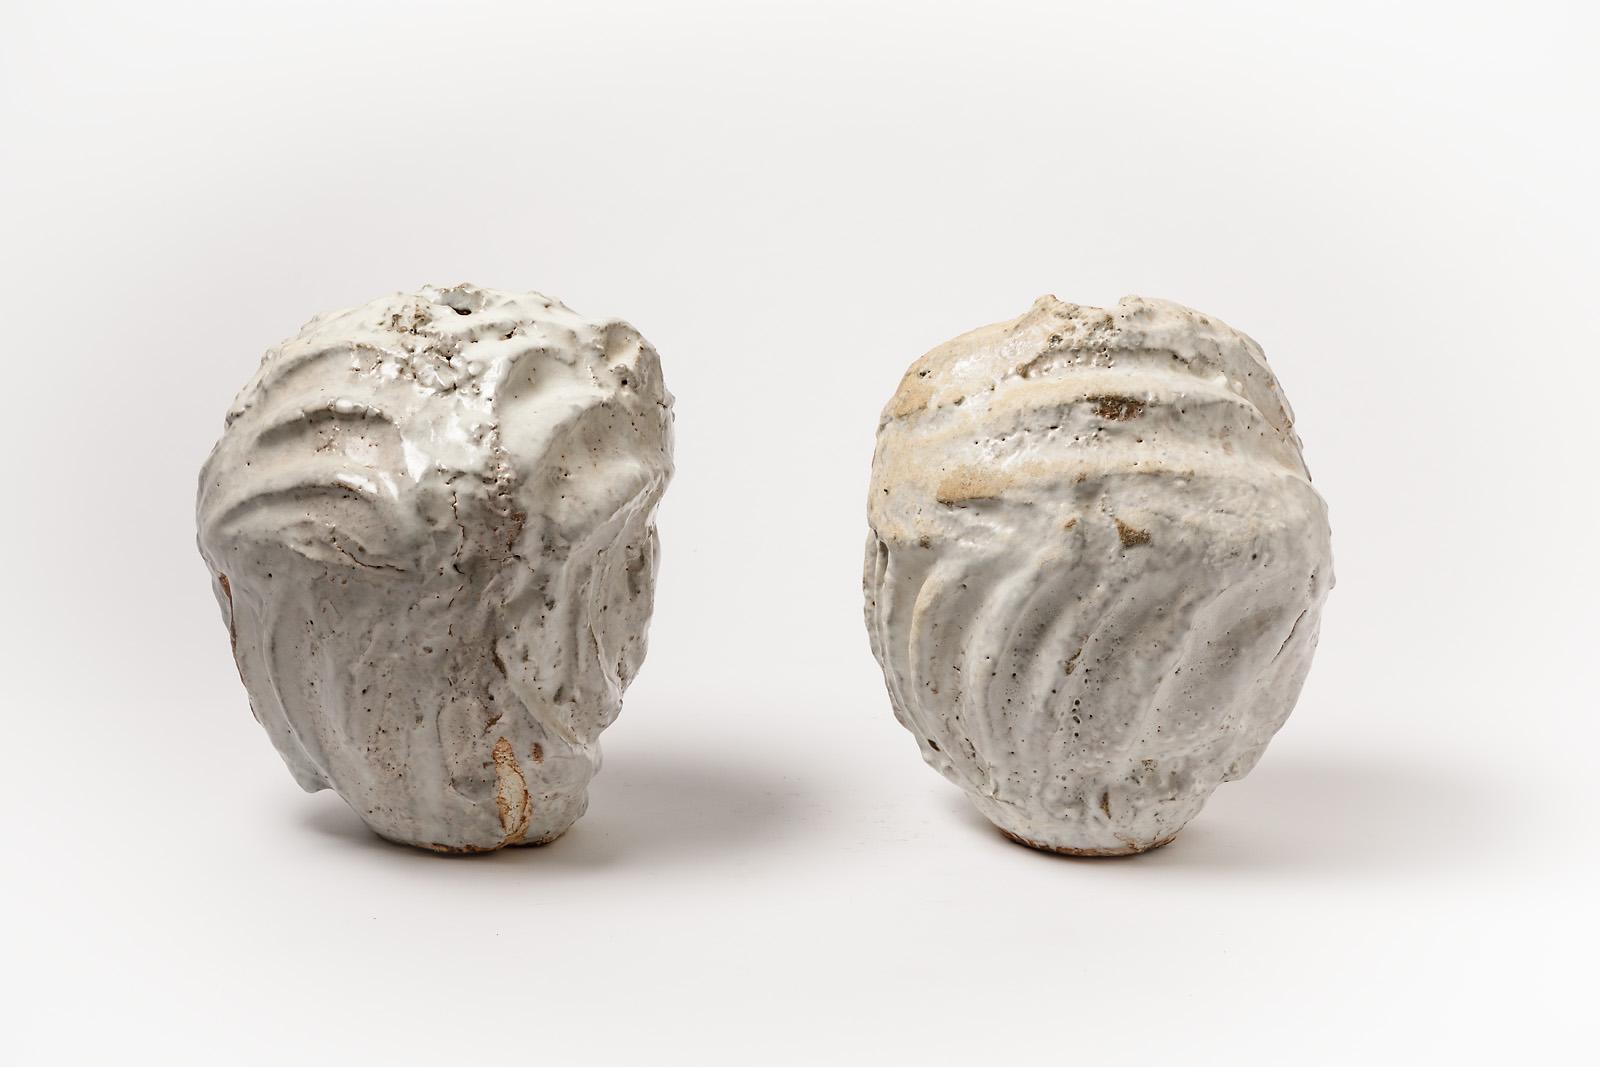 Contemporary Abstract White Stoneware Ceramic Vase or Sculpture by Hervé Rousseau La Borne